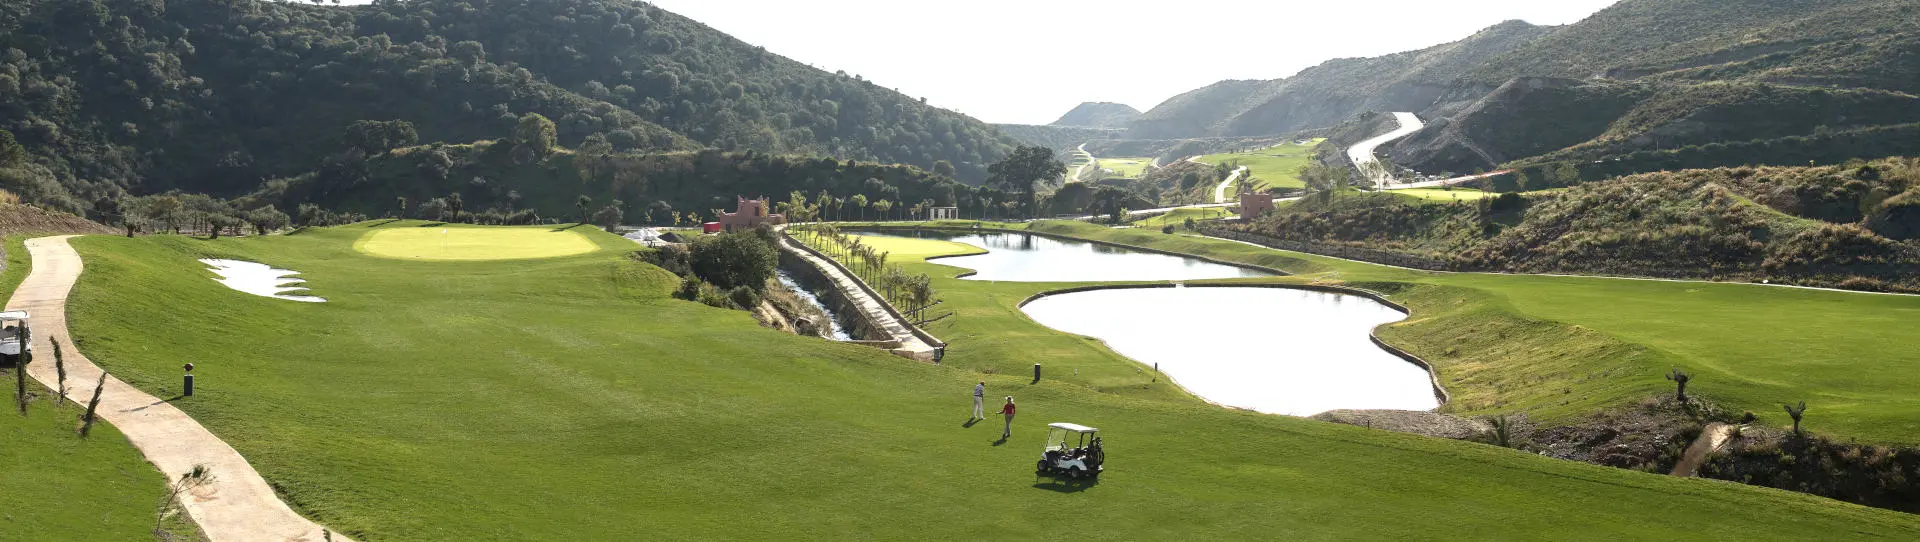 Spain golf holidays - Villa Padierna 3 Rounds Golf Pack - Photo 1